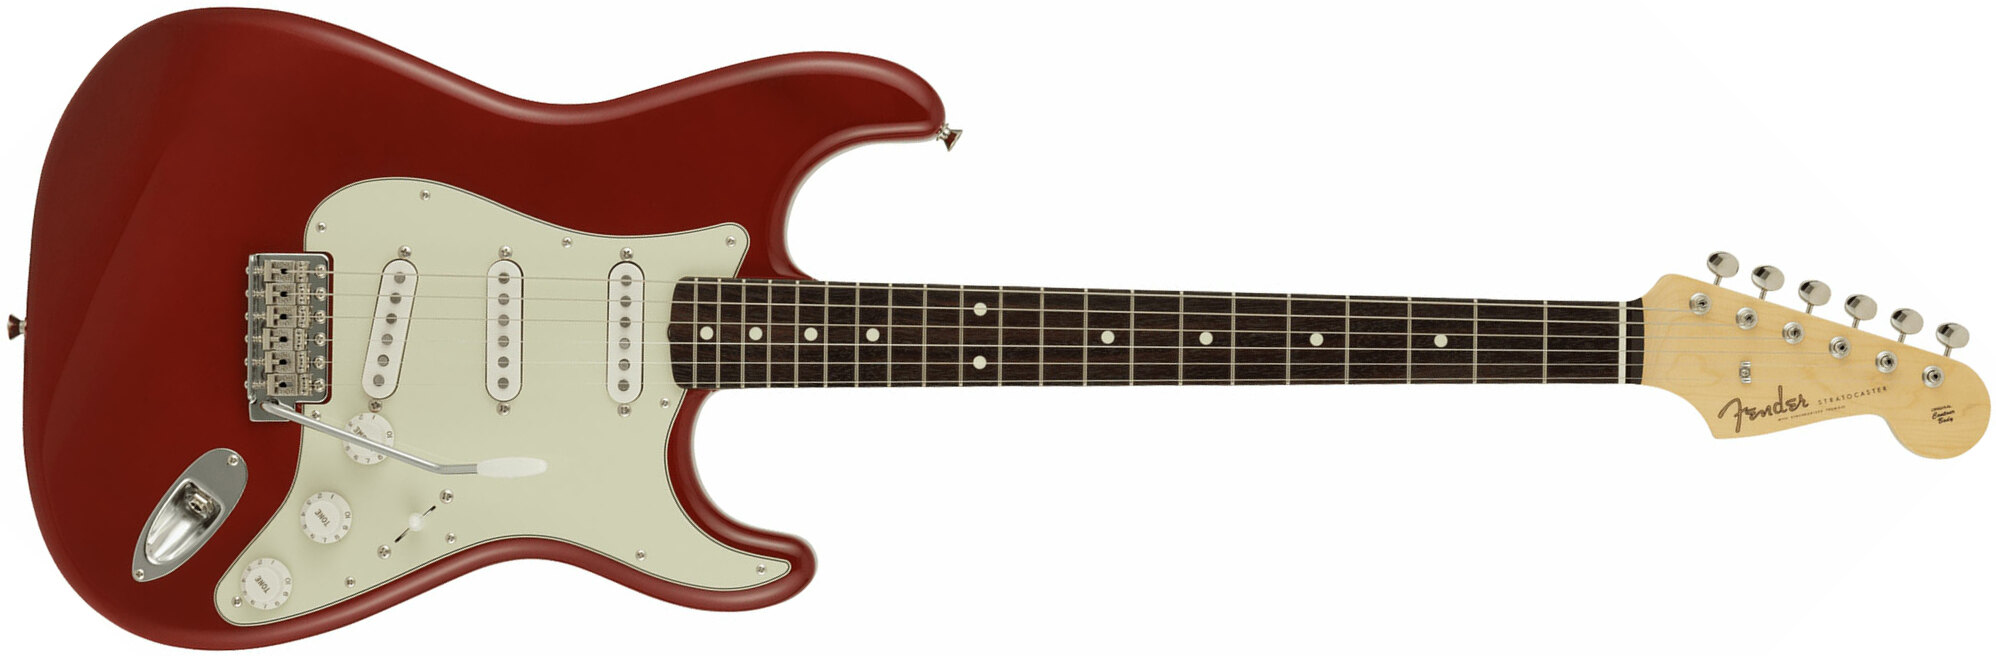 Fender Strat Traditional 60s Mij Jap 3s Trem Rw - Dakota Red Aged - Guitarra eléctrica con forma de str. - Main picture